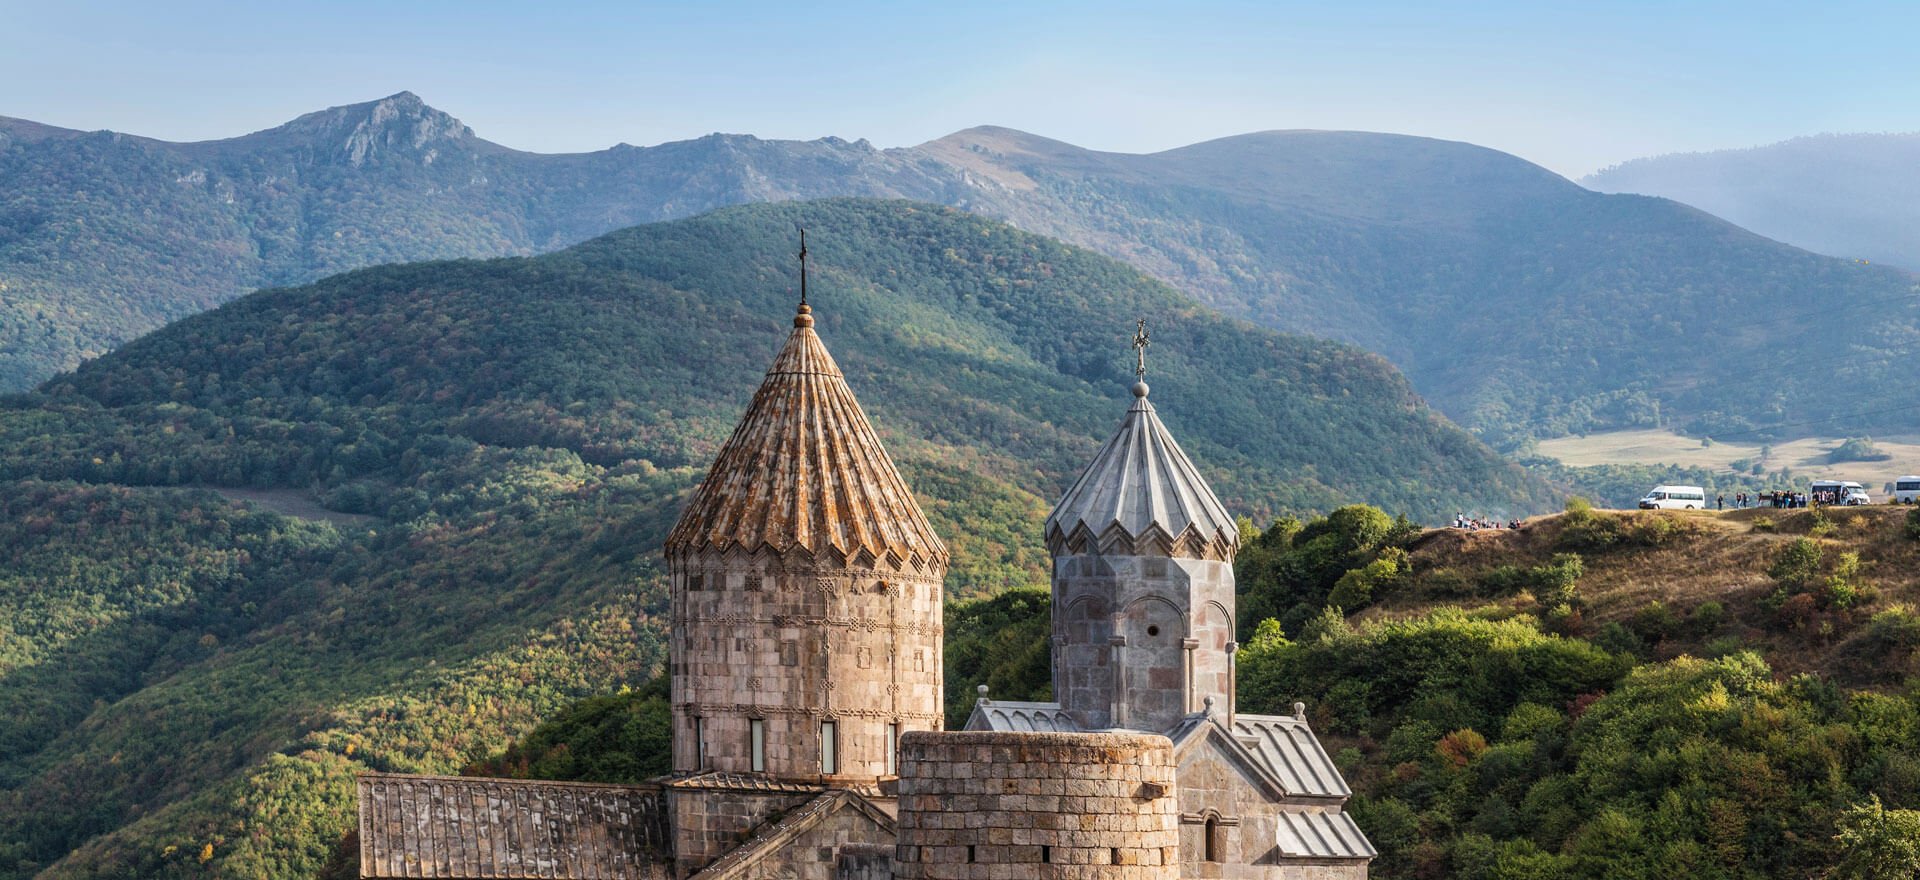 Armenia holidays and tours - Typical Armenian church